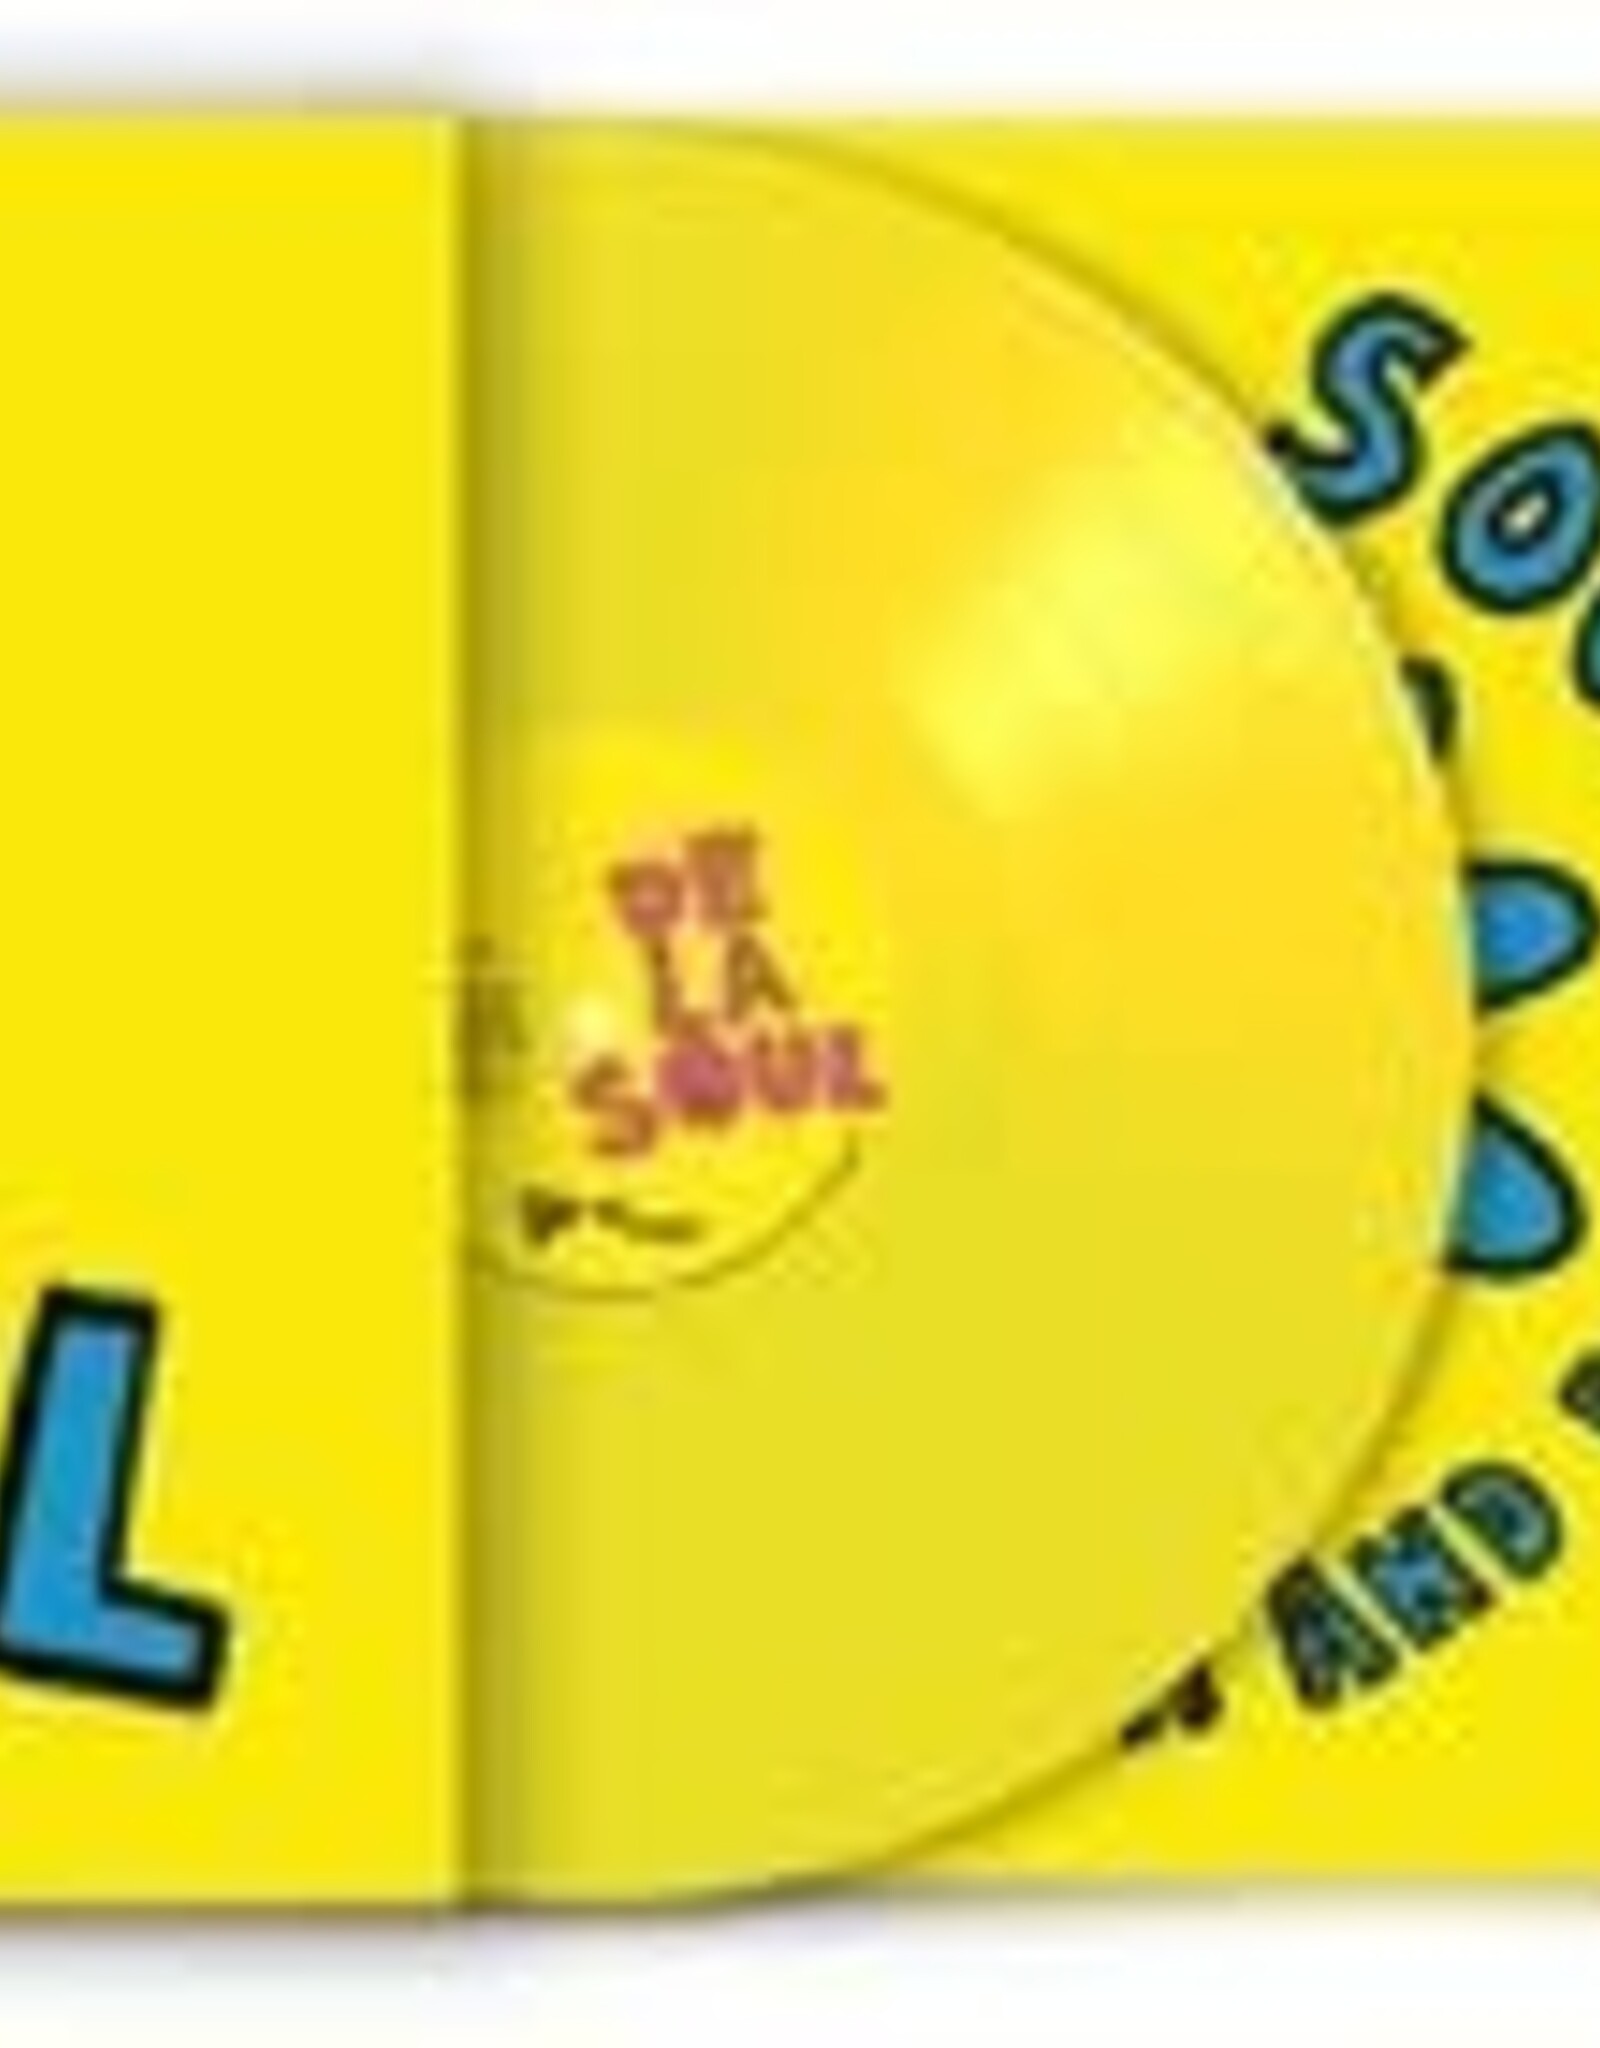 De La Soul - 3 Feet High and Rising (Yellow Vinyl)